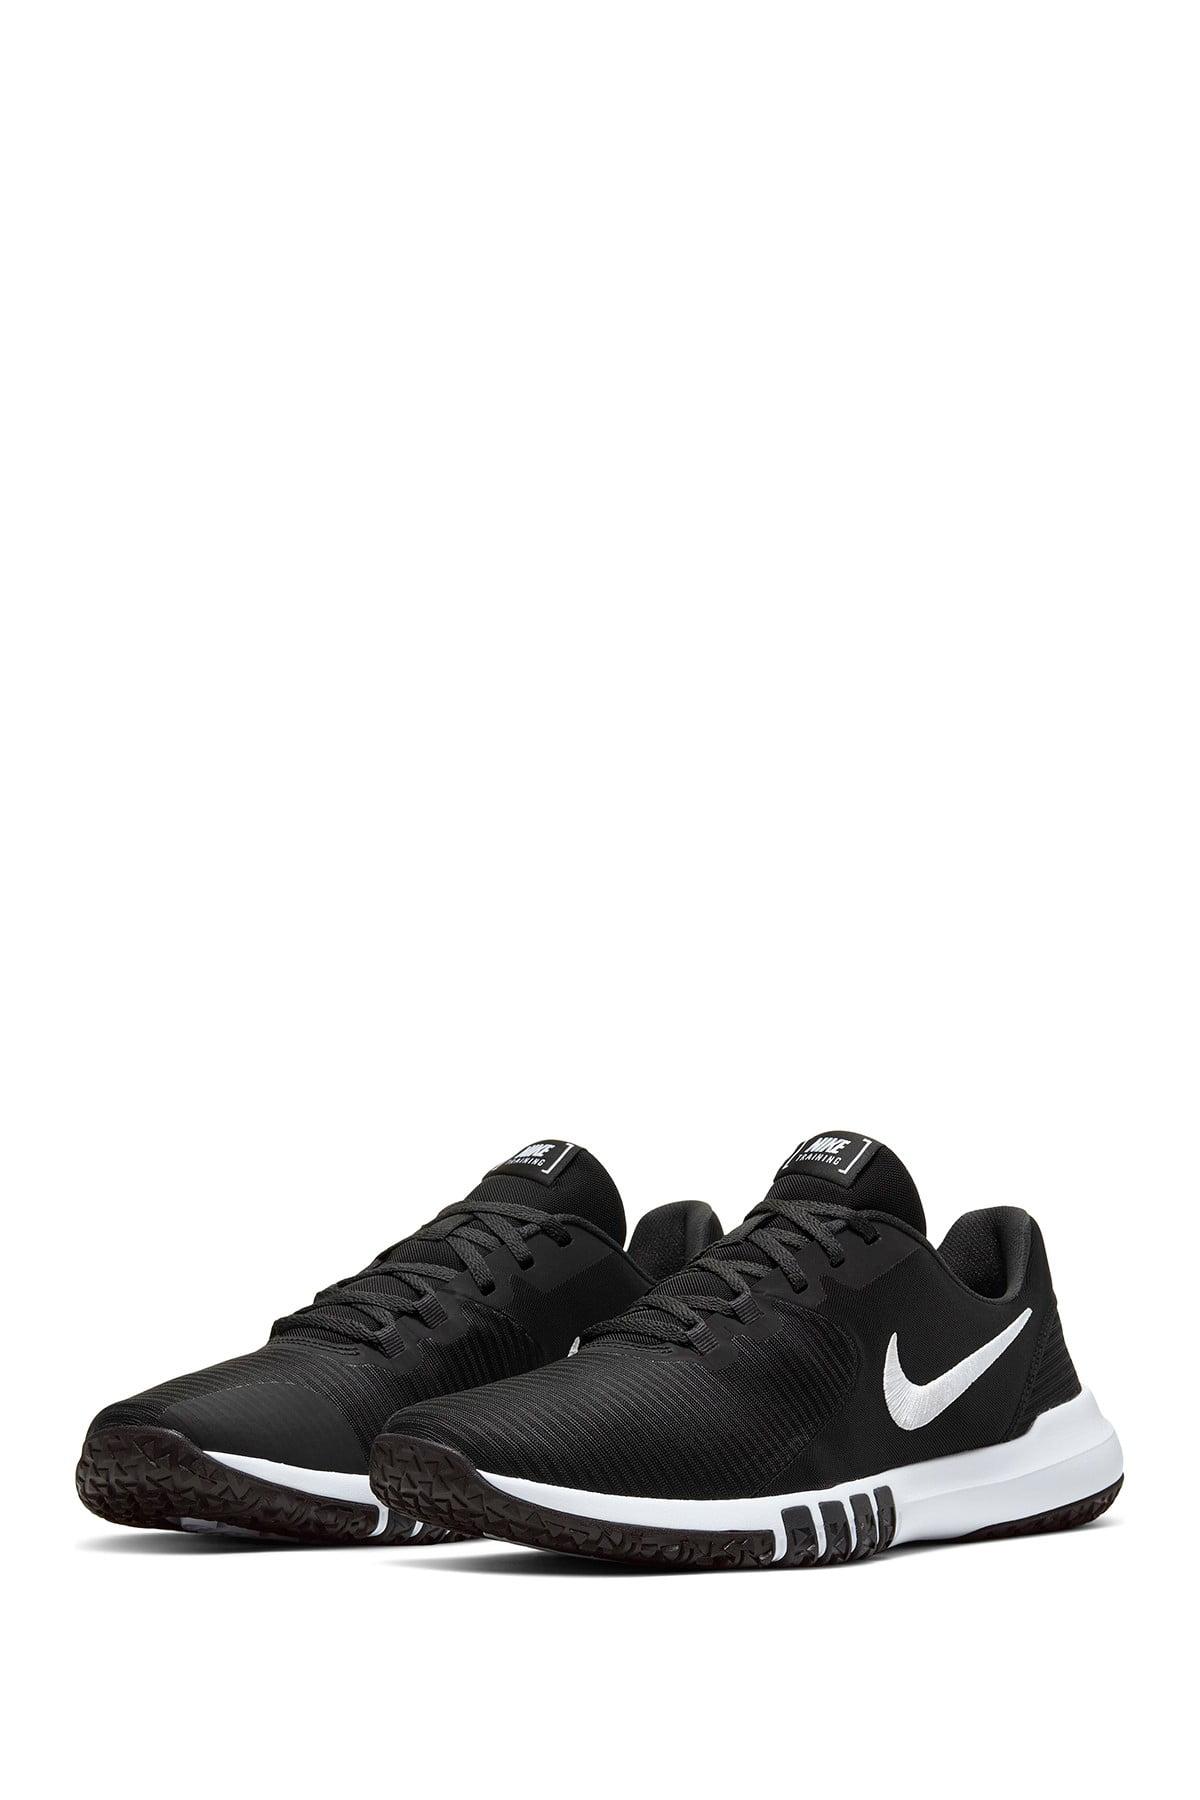 Nike Rubber Flex Control 4 Training Shoe in Black,Dark Smoke Grey,Smoke  Grey (Black) for Men - Save 30% | Lyst